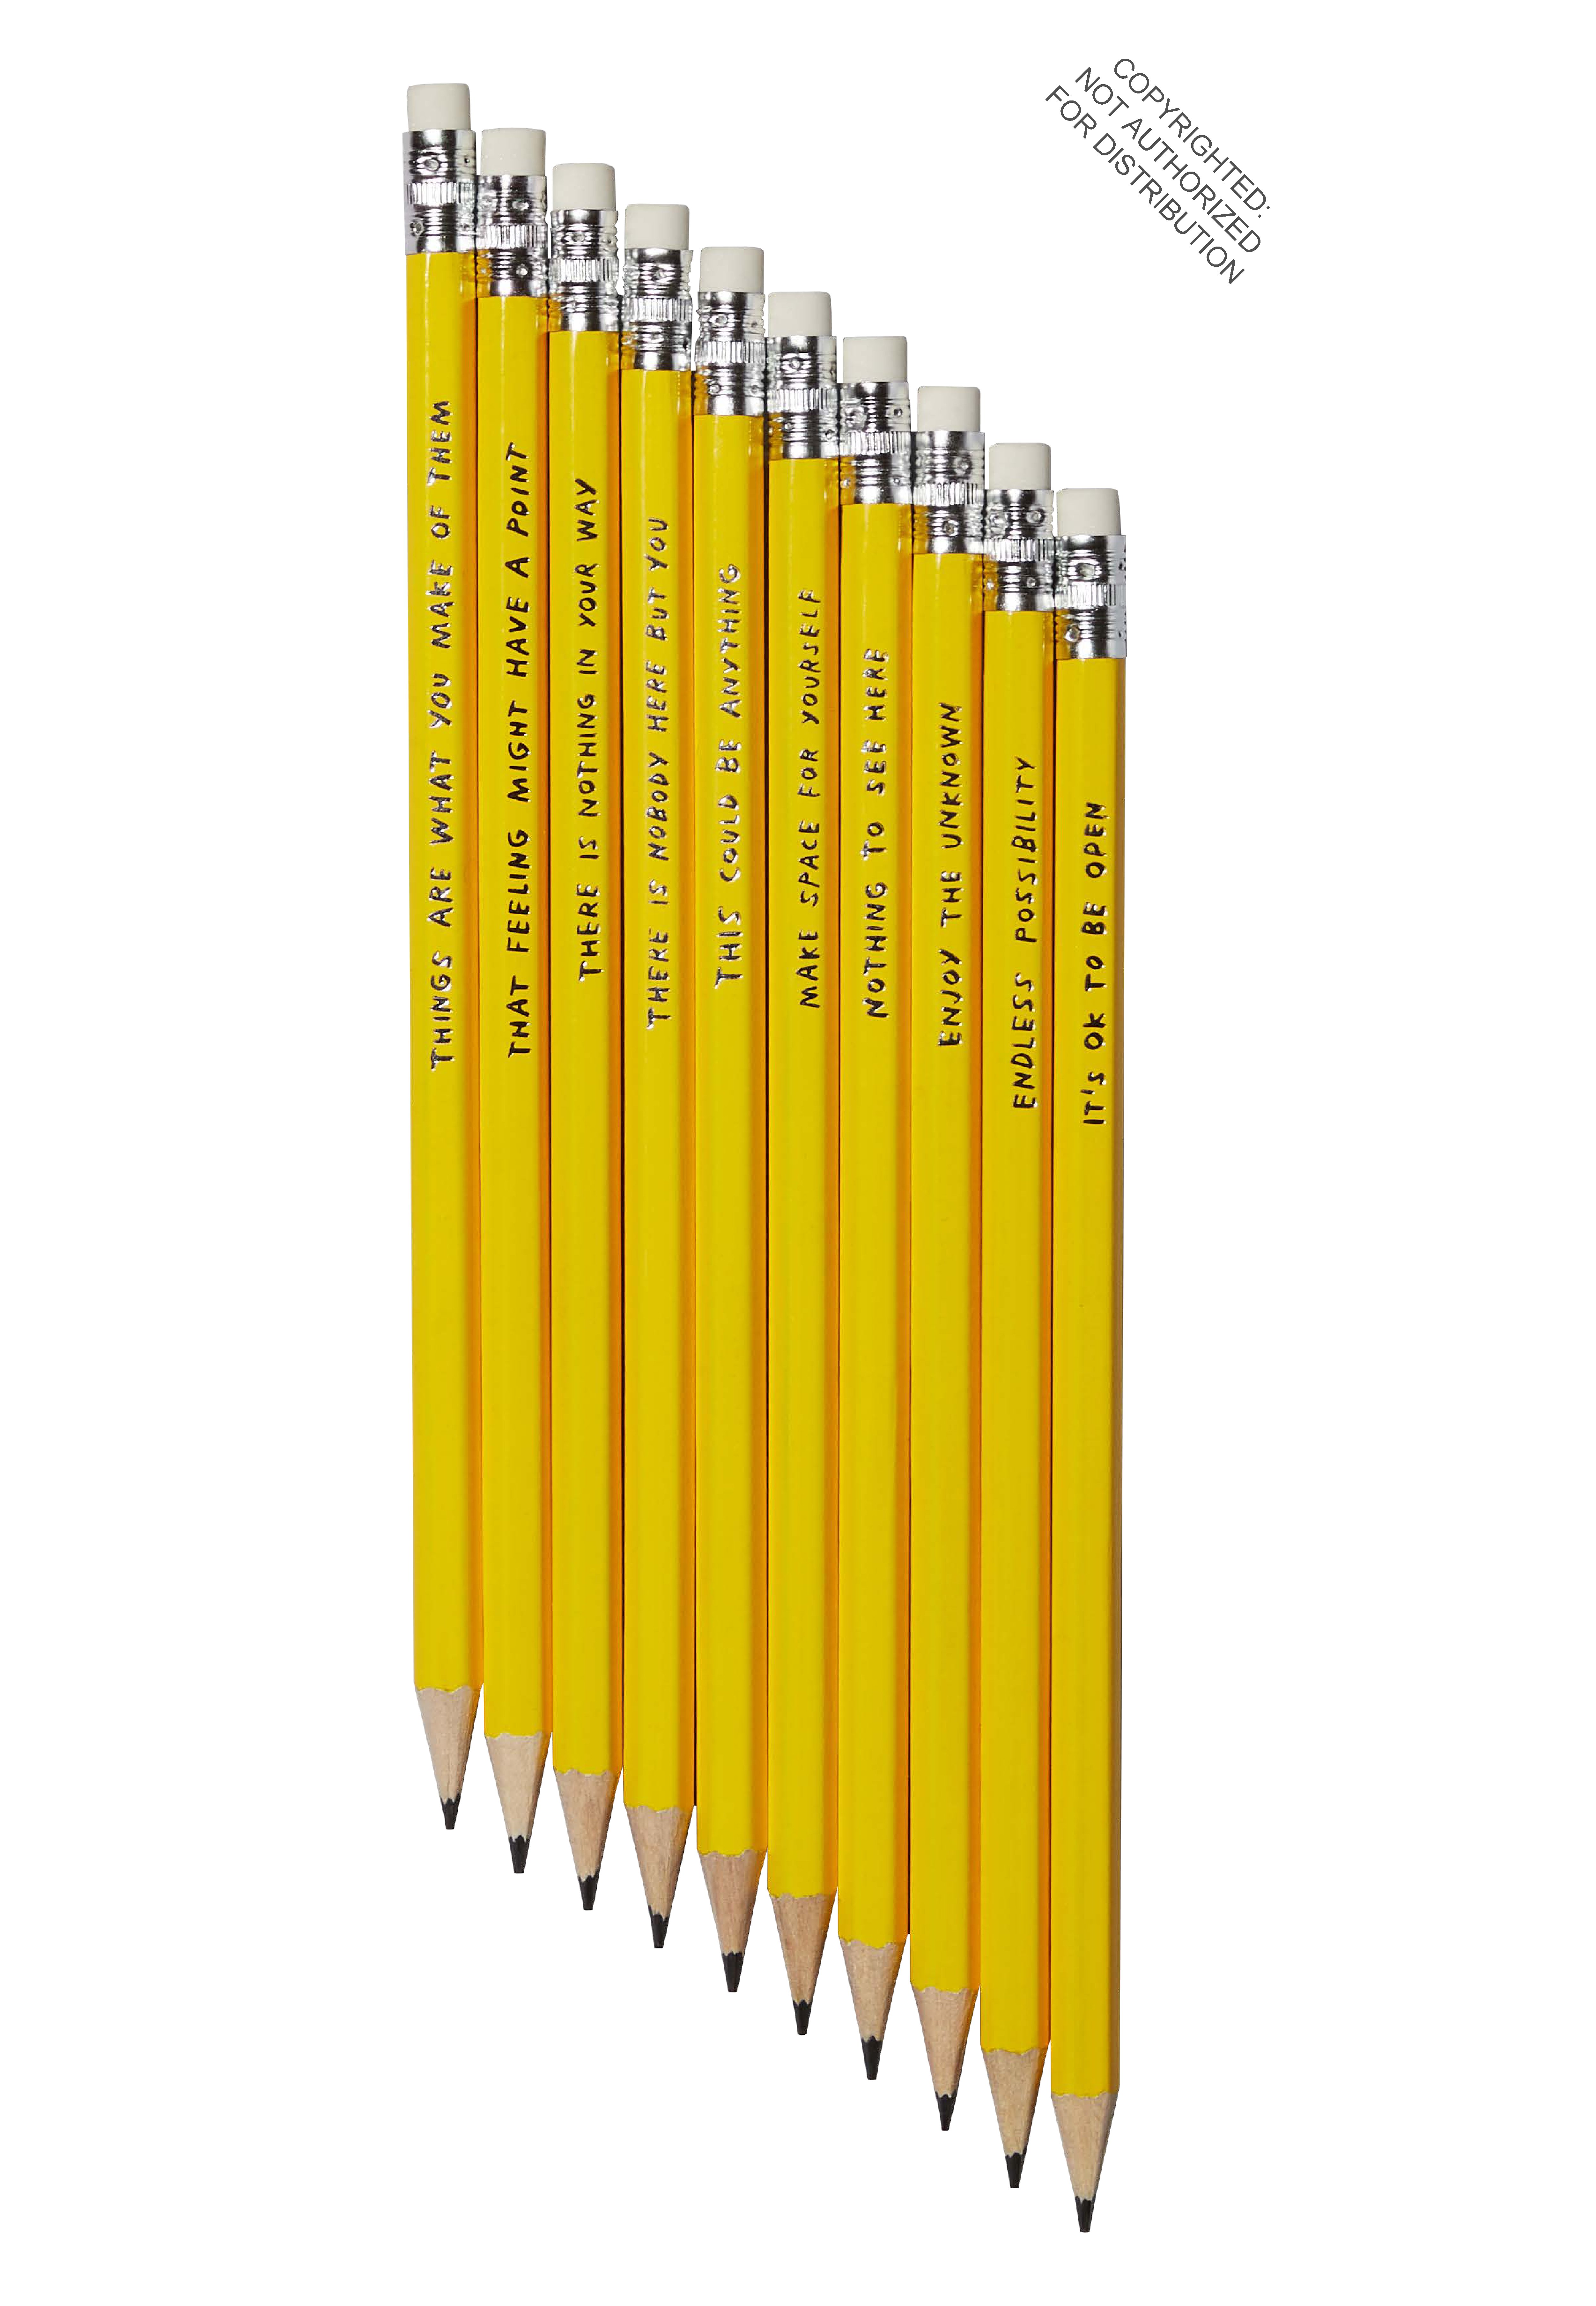 Endless Possibilities Pencils